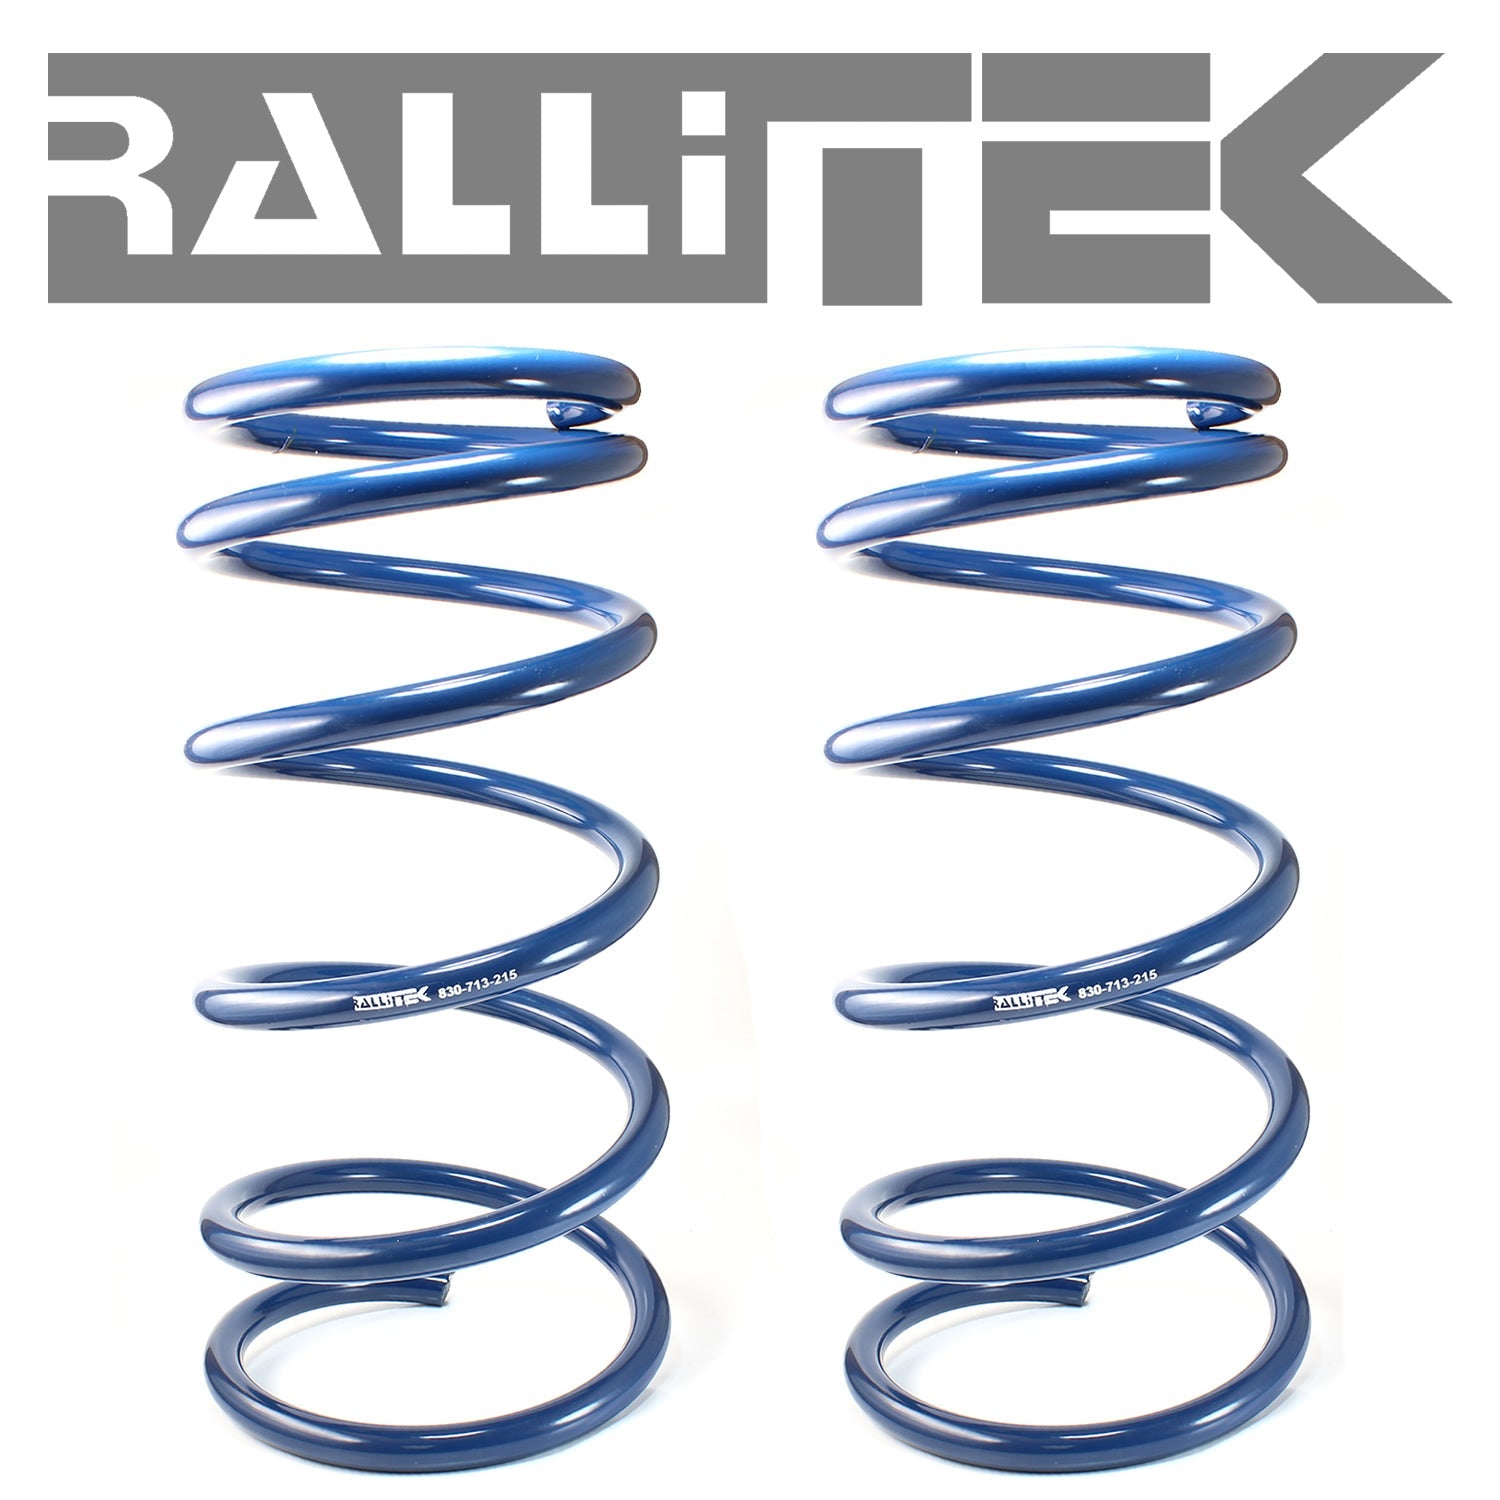 RalliTEK 0.75" Front Raised Springs & OEM Struts Assembled - Outback 3.6R 2015-2018